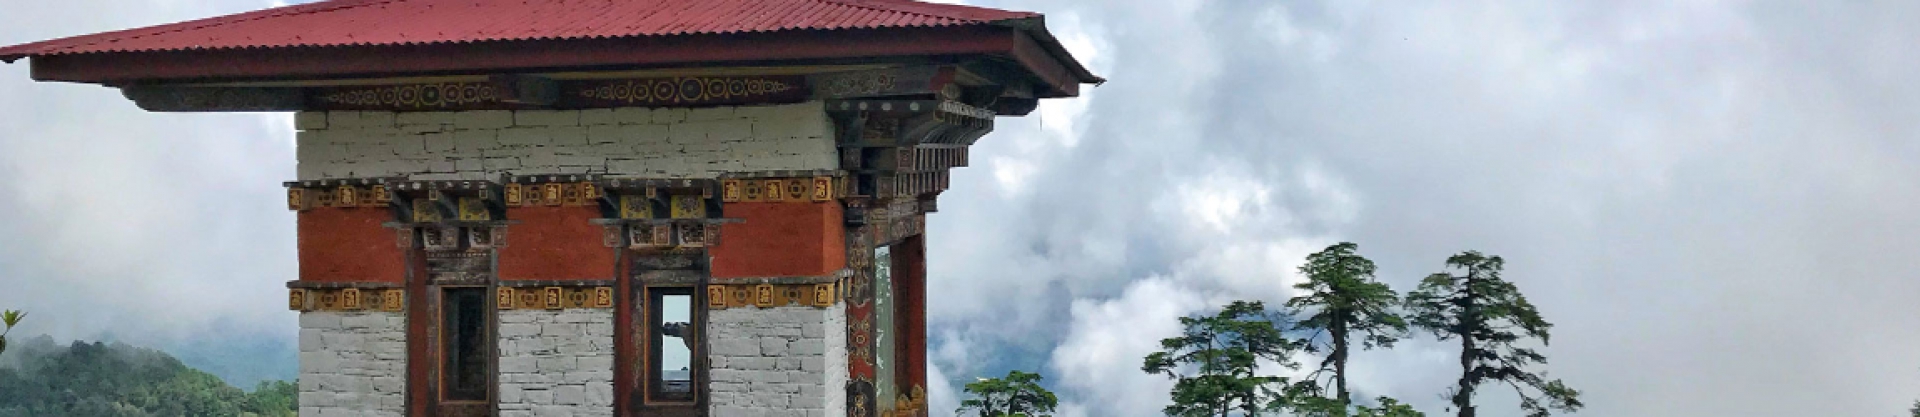 Phuentsholing 1N - Thimphu 2N – Wangdue / Punakha 2N - Paro 2N